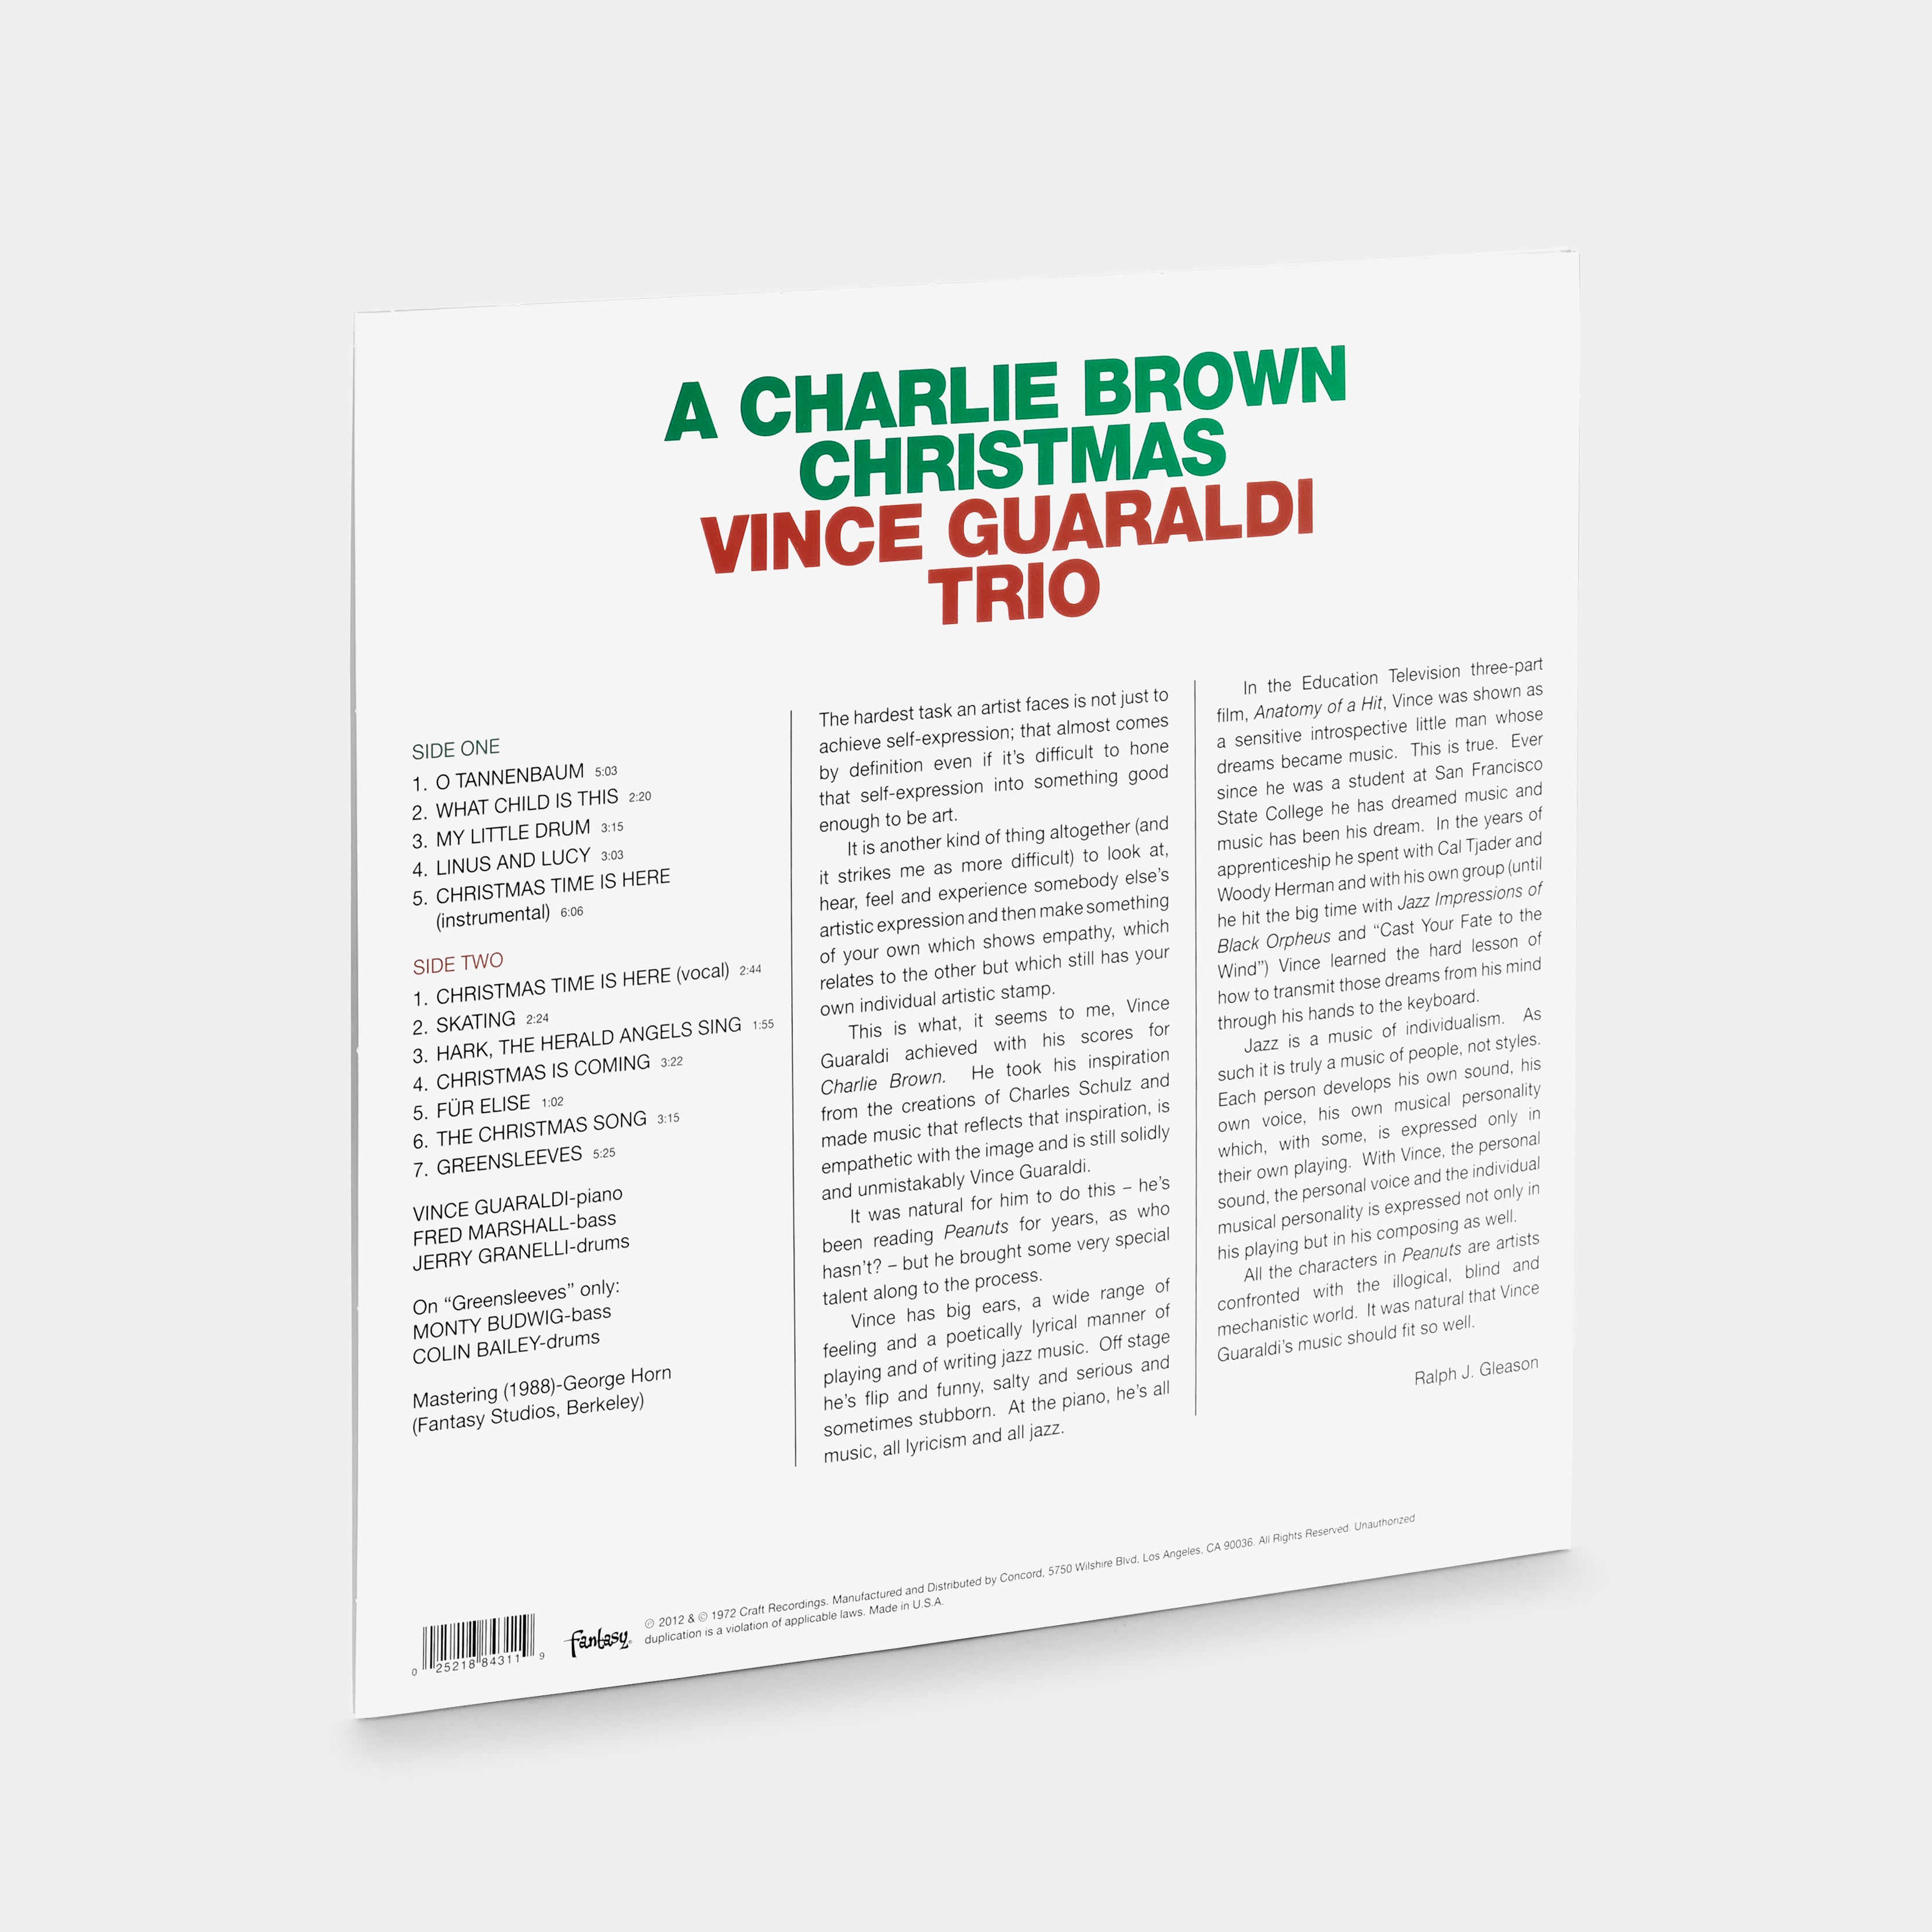 Vince Guaraldi Trio - A Charlie Brown Christmas LP Green Vinyl Record